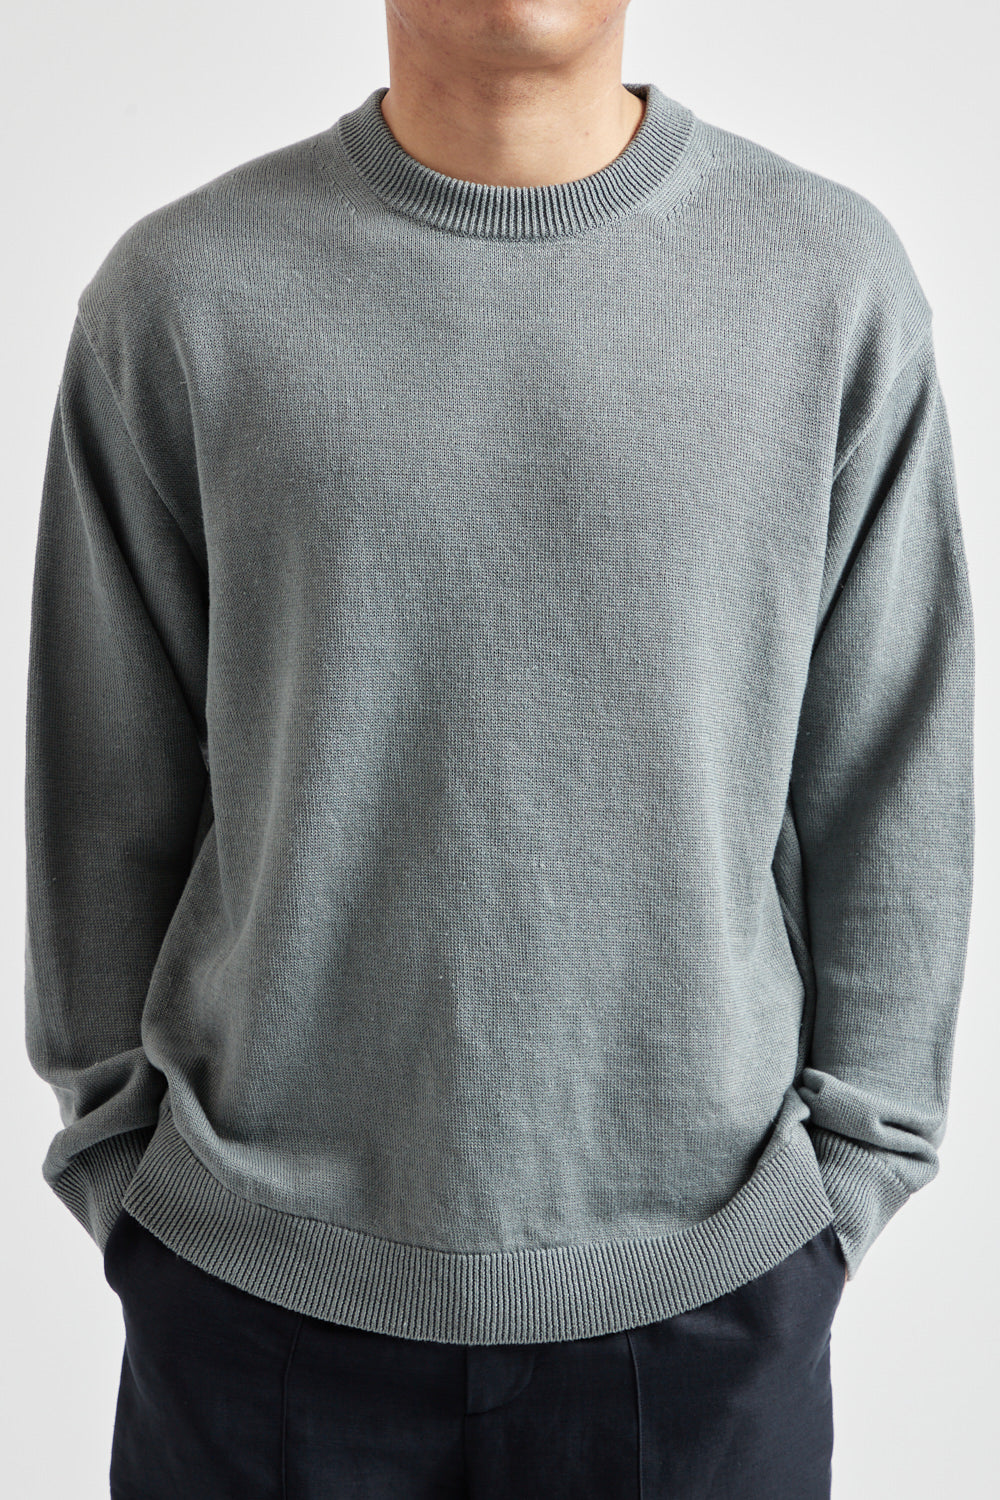 Hemp Knit Crewneck Sweater - Green